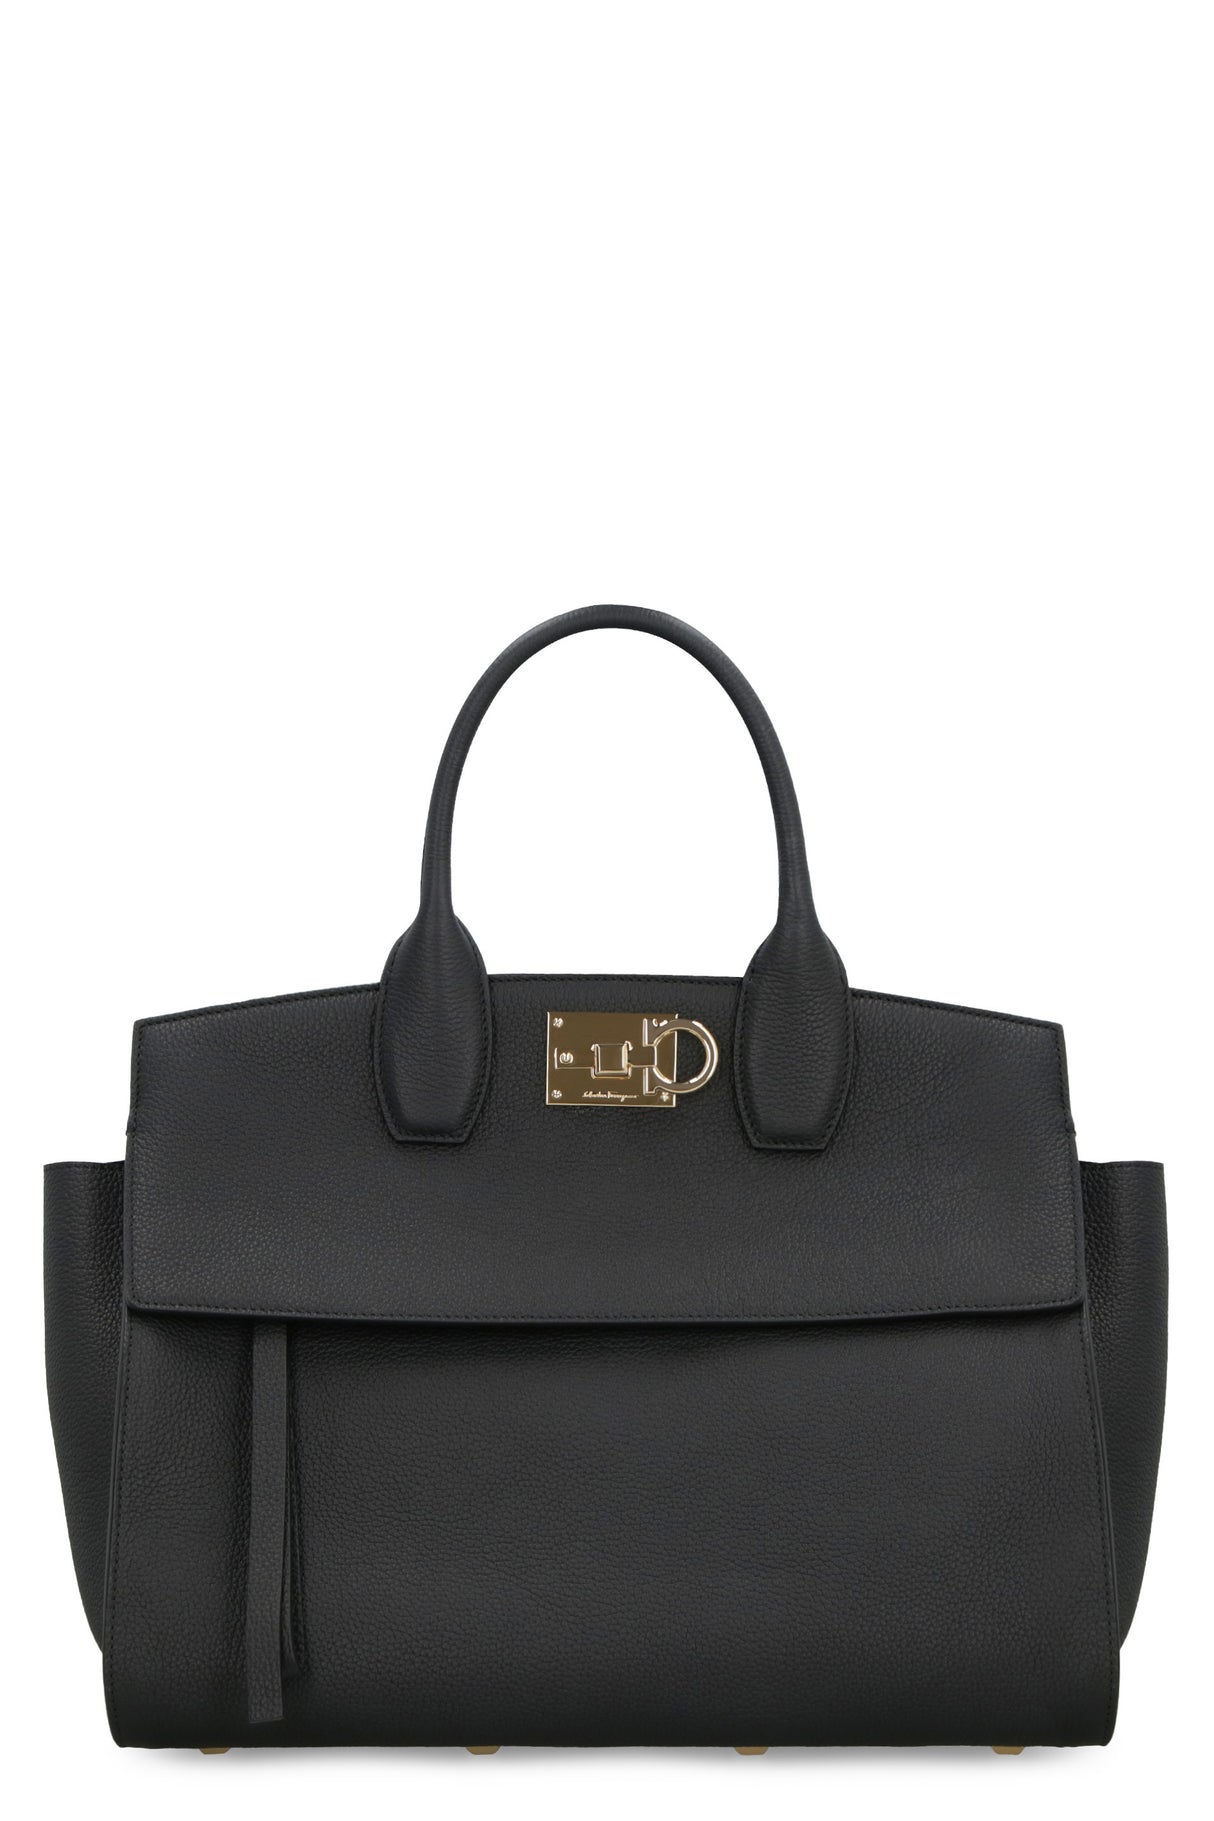 FERRAGAMO Studio Soft Leather Handbag - Black Calfskin, Gold-Tone Hardware, Adjustable Strap